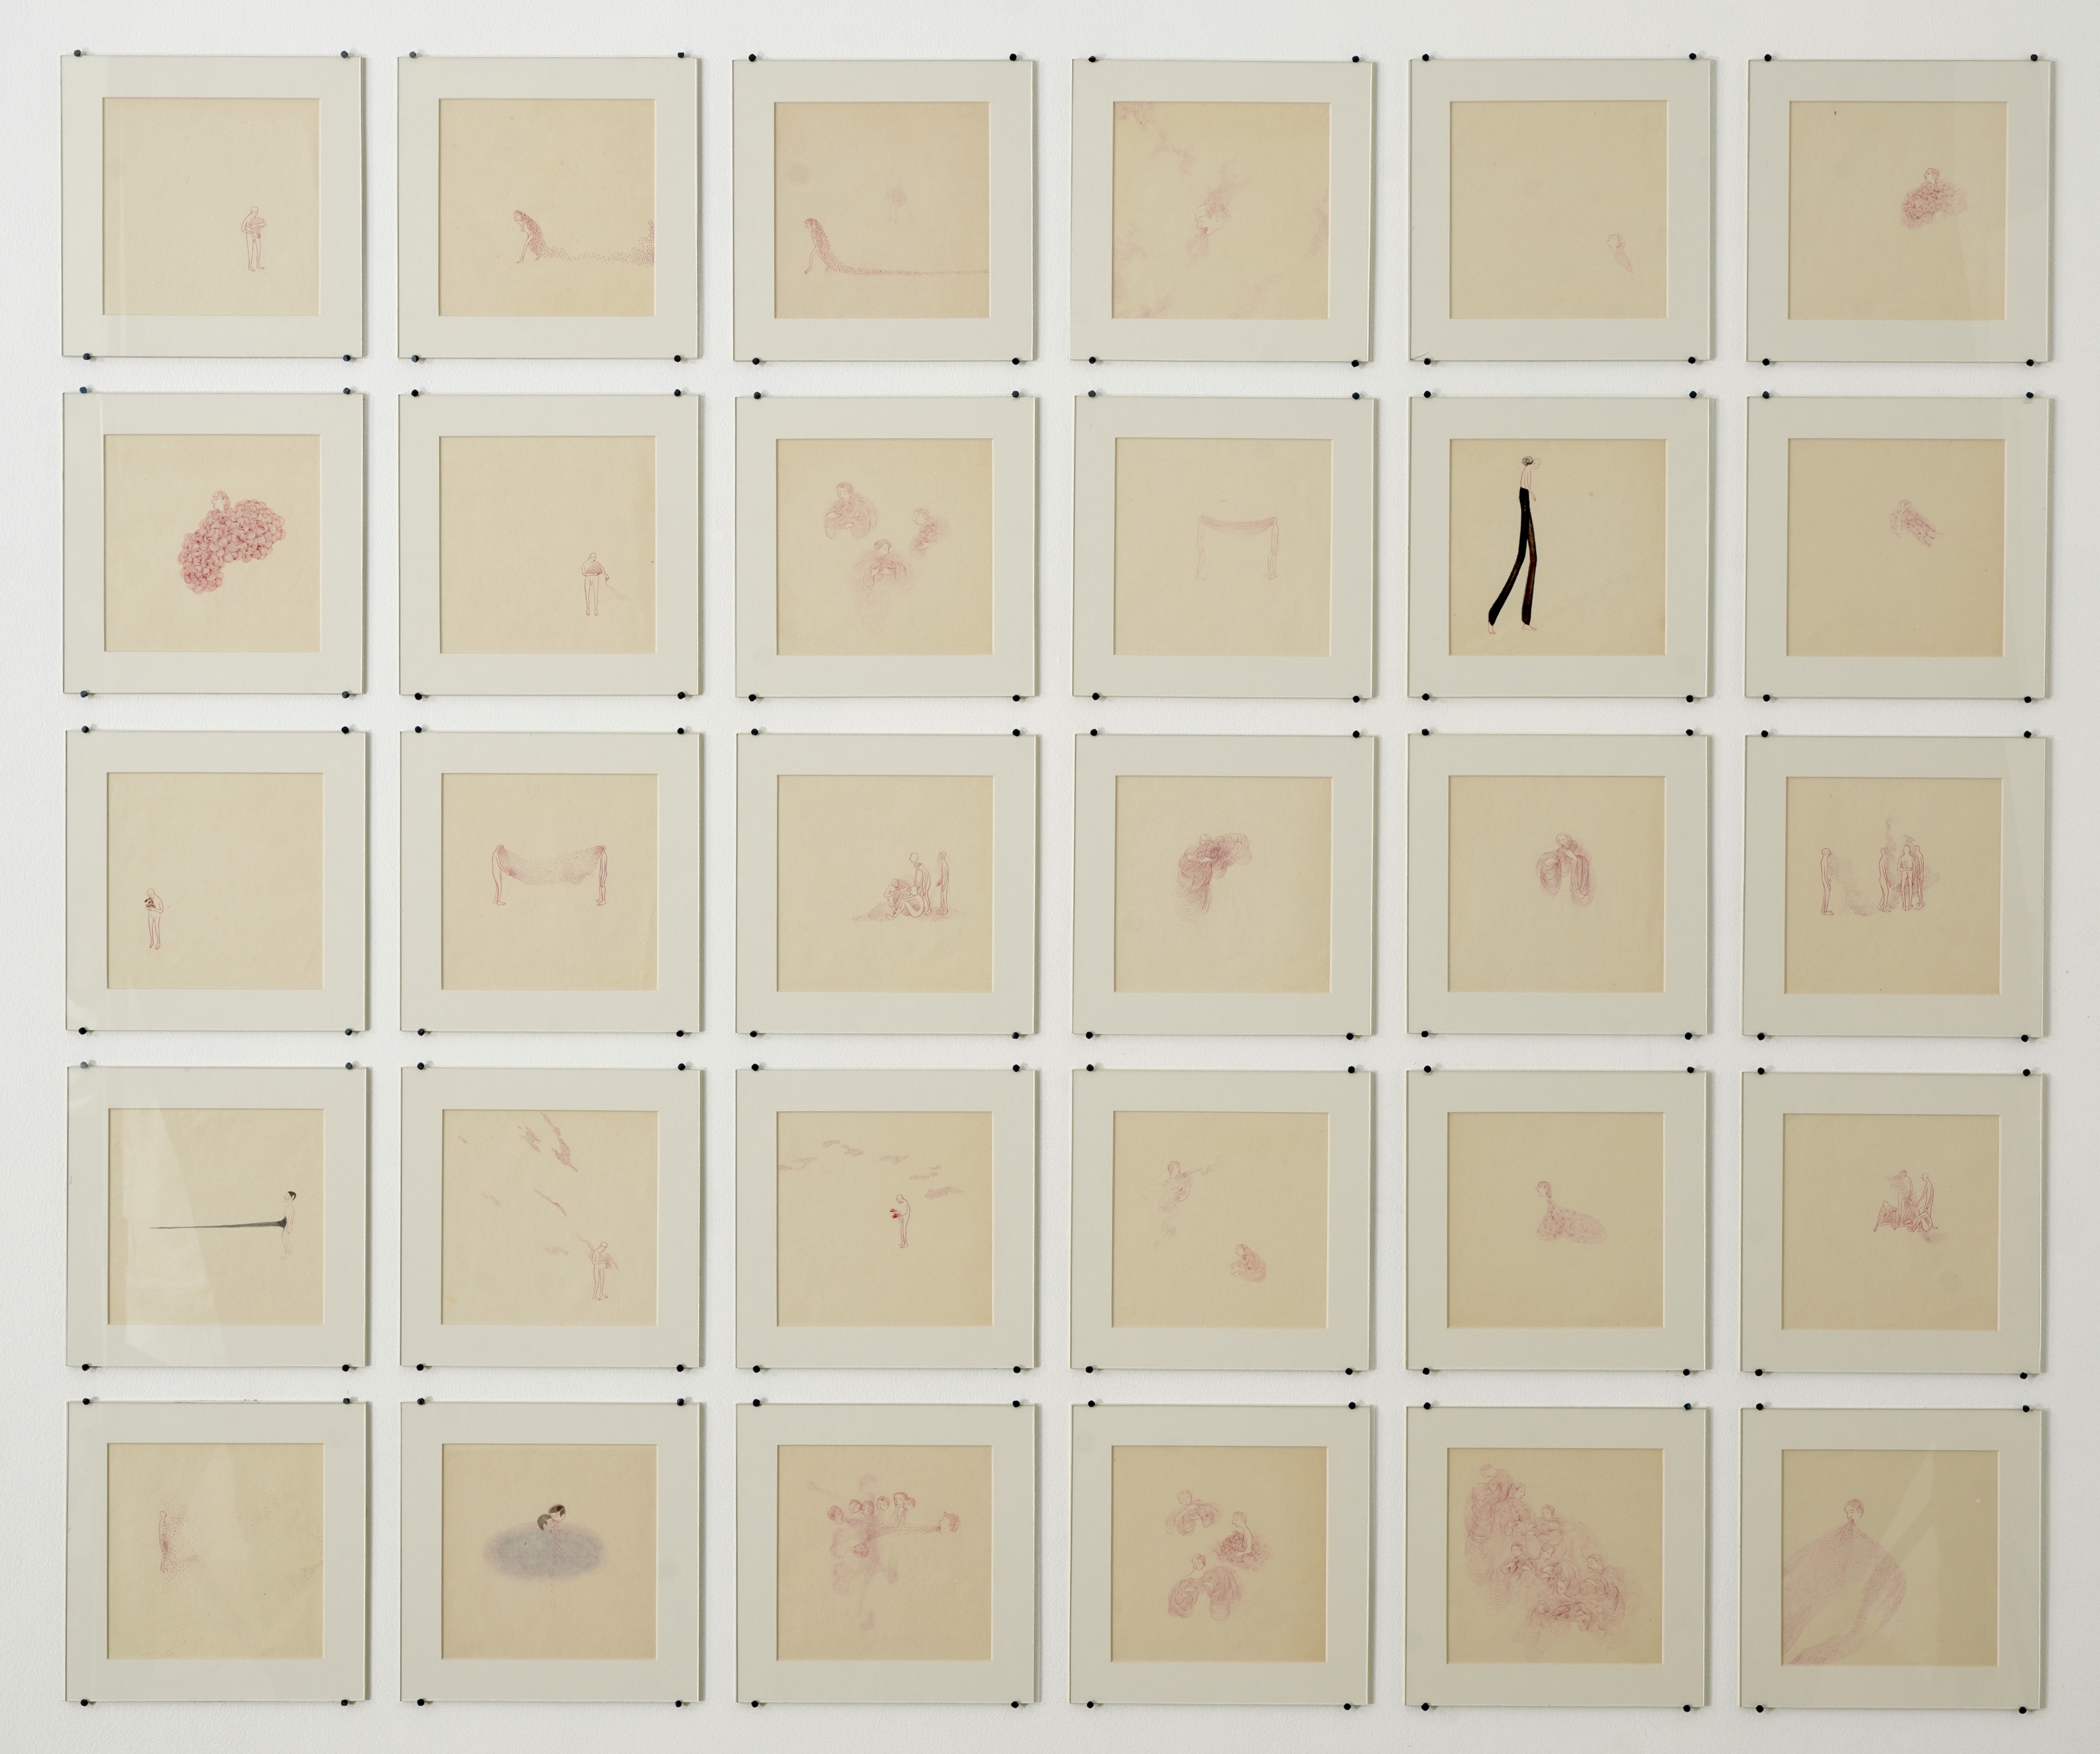 BUDDHADEV MUKHERJEE,&amp;nbsp;Untitled (30 works), 2016,&amp;nbsp;Chinese watercolour on Chinese rice paper

8 x 8 in / 20 x 20 cm